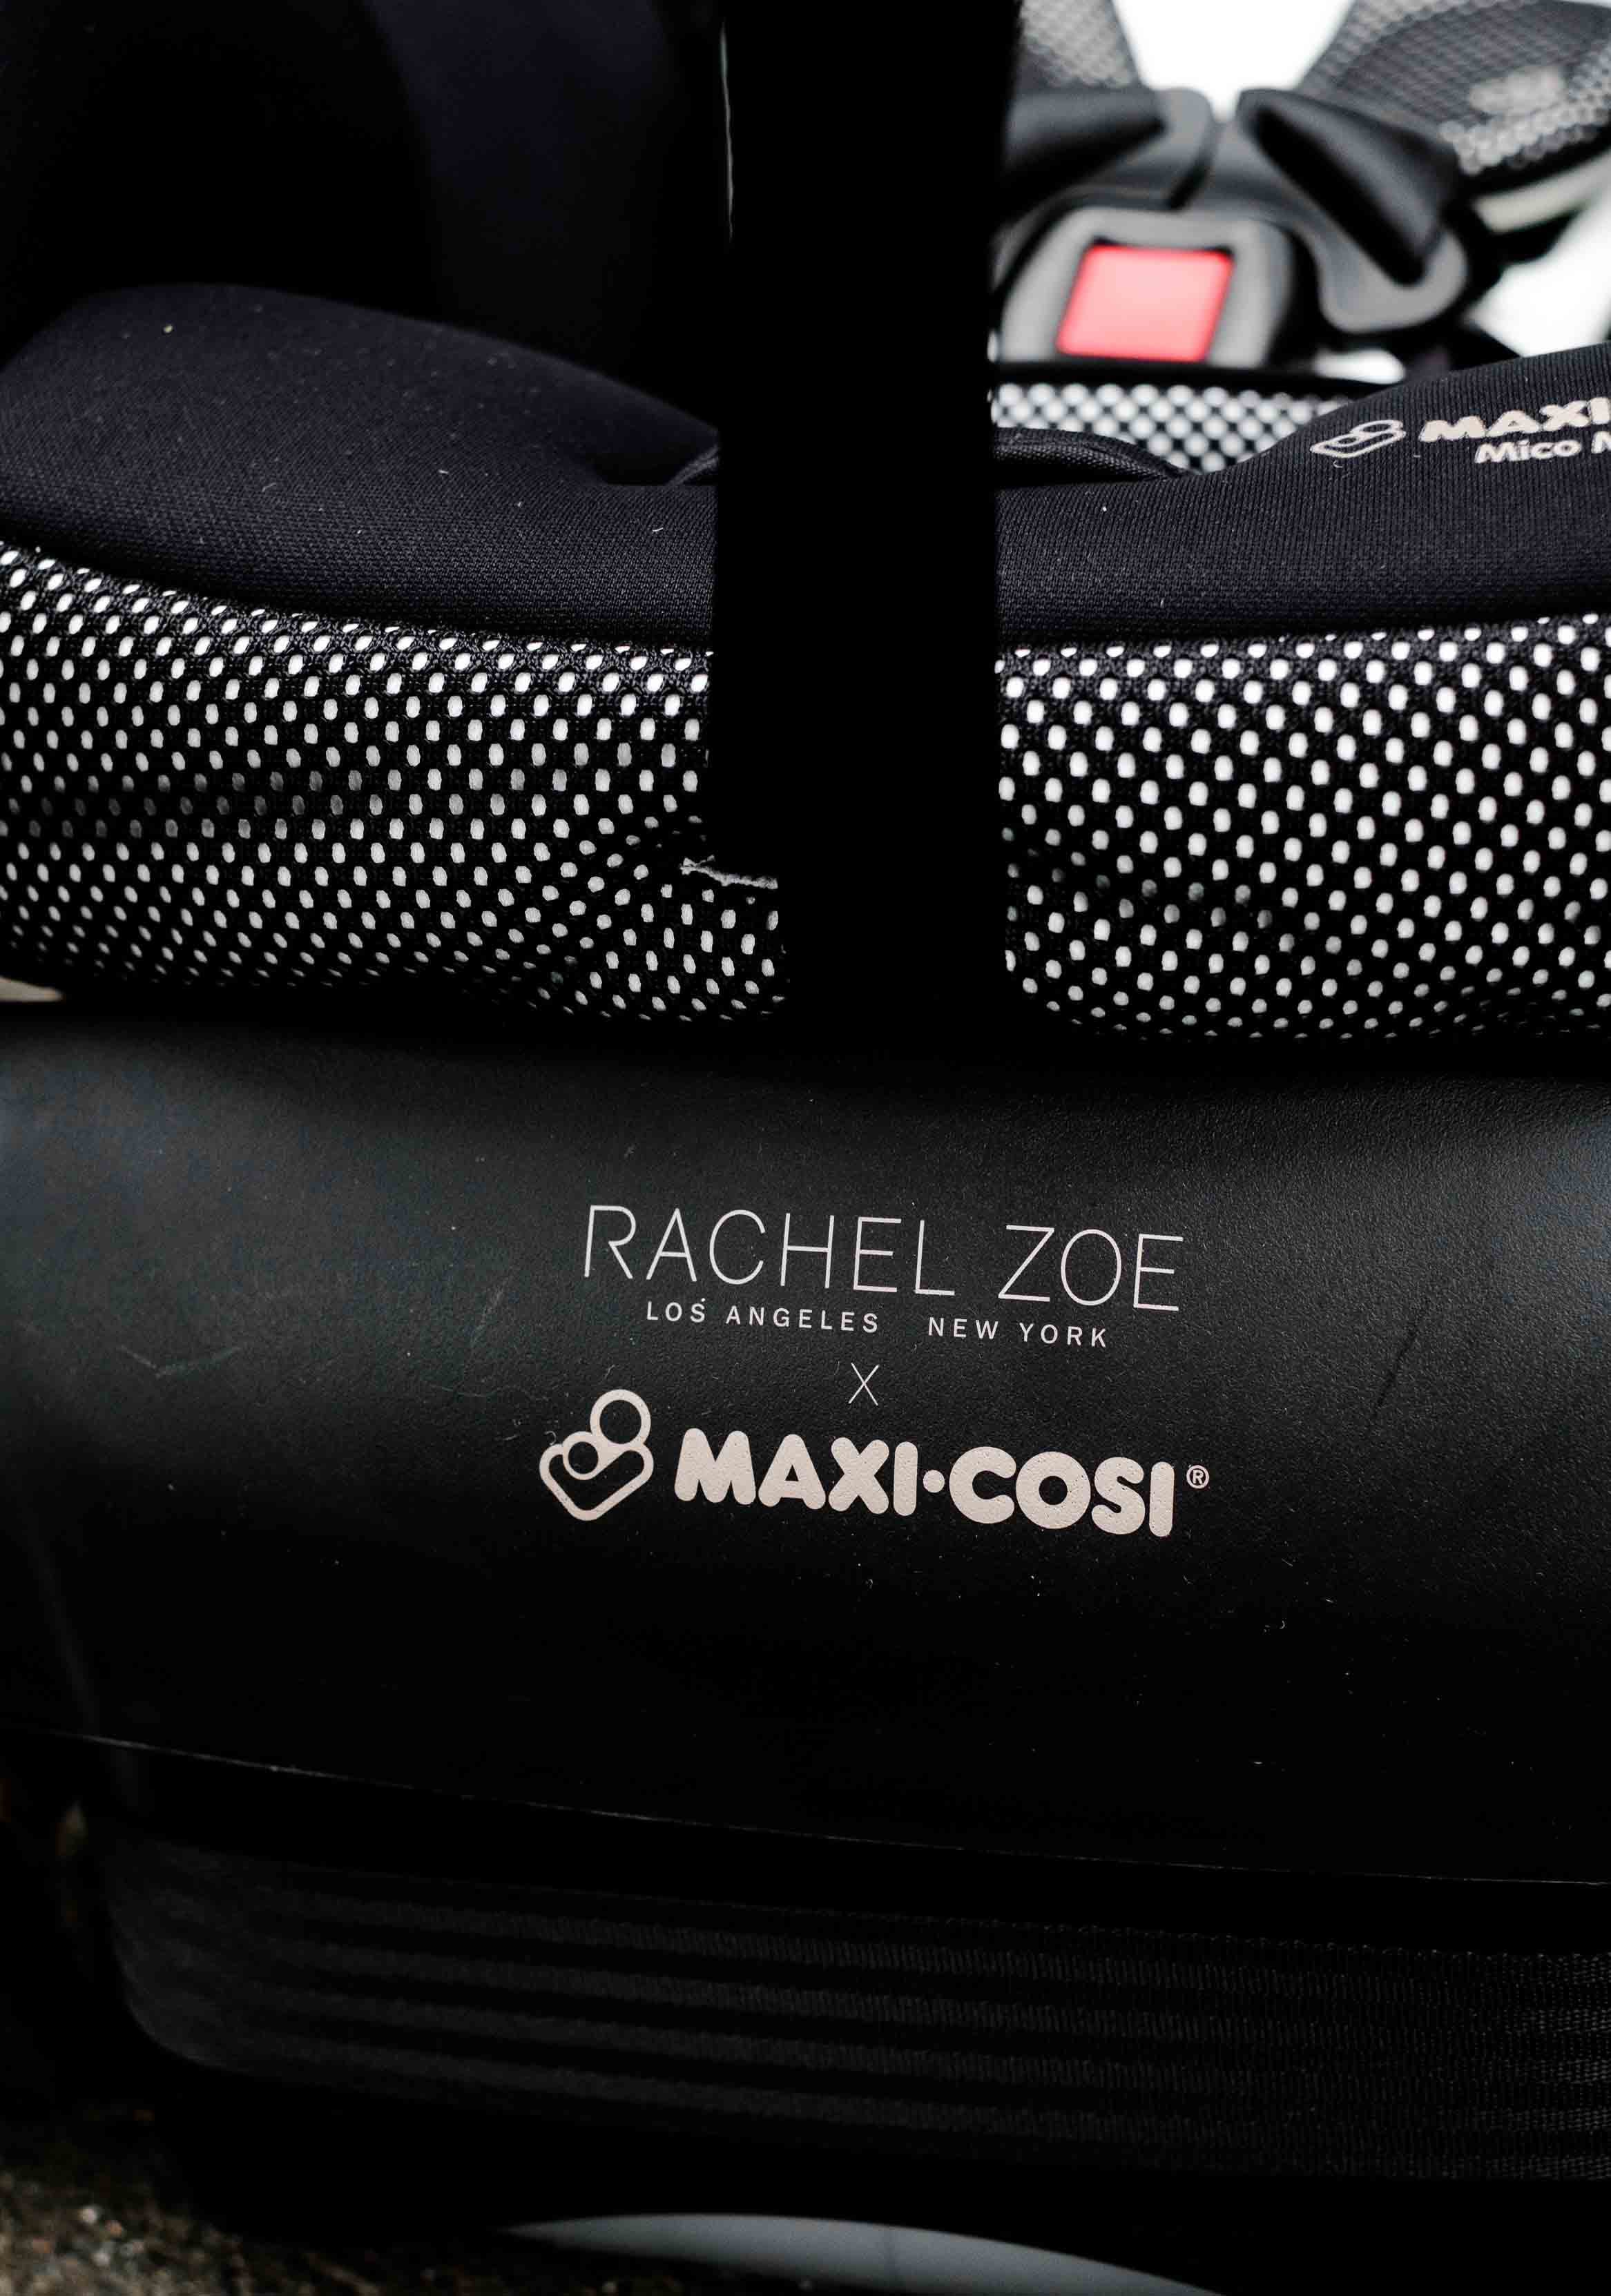 Maxi-Cosi x Rachel Zoe Collection by popular Atlanta lifestyle blogger Happily Hughes